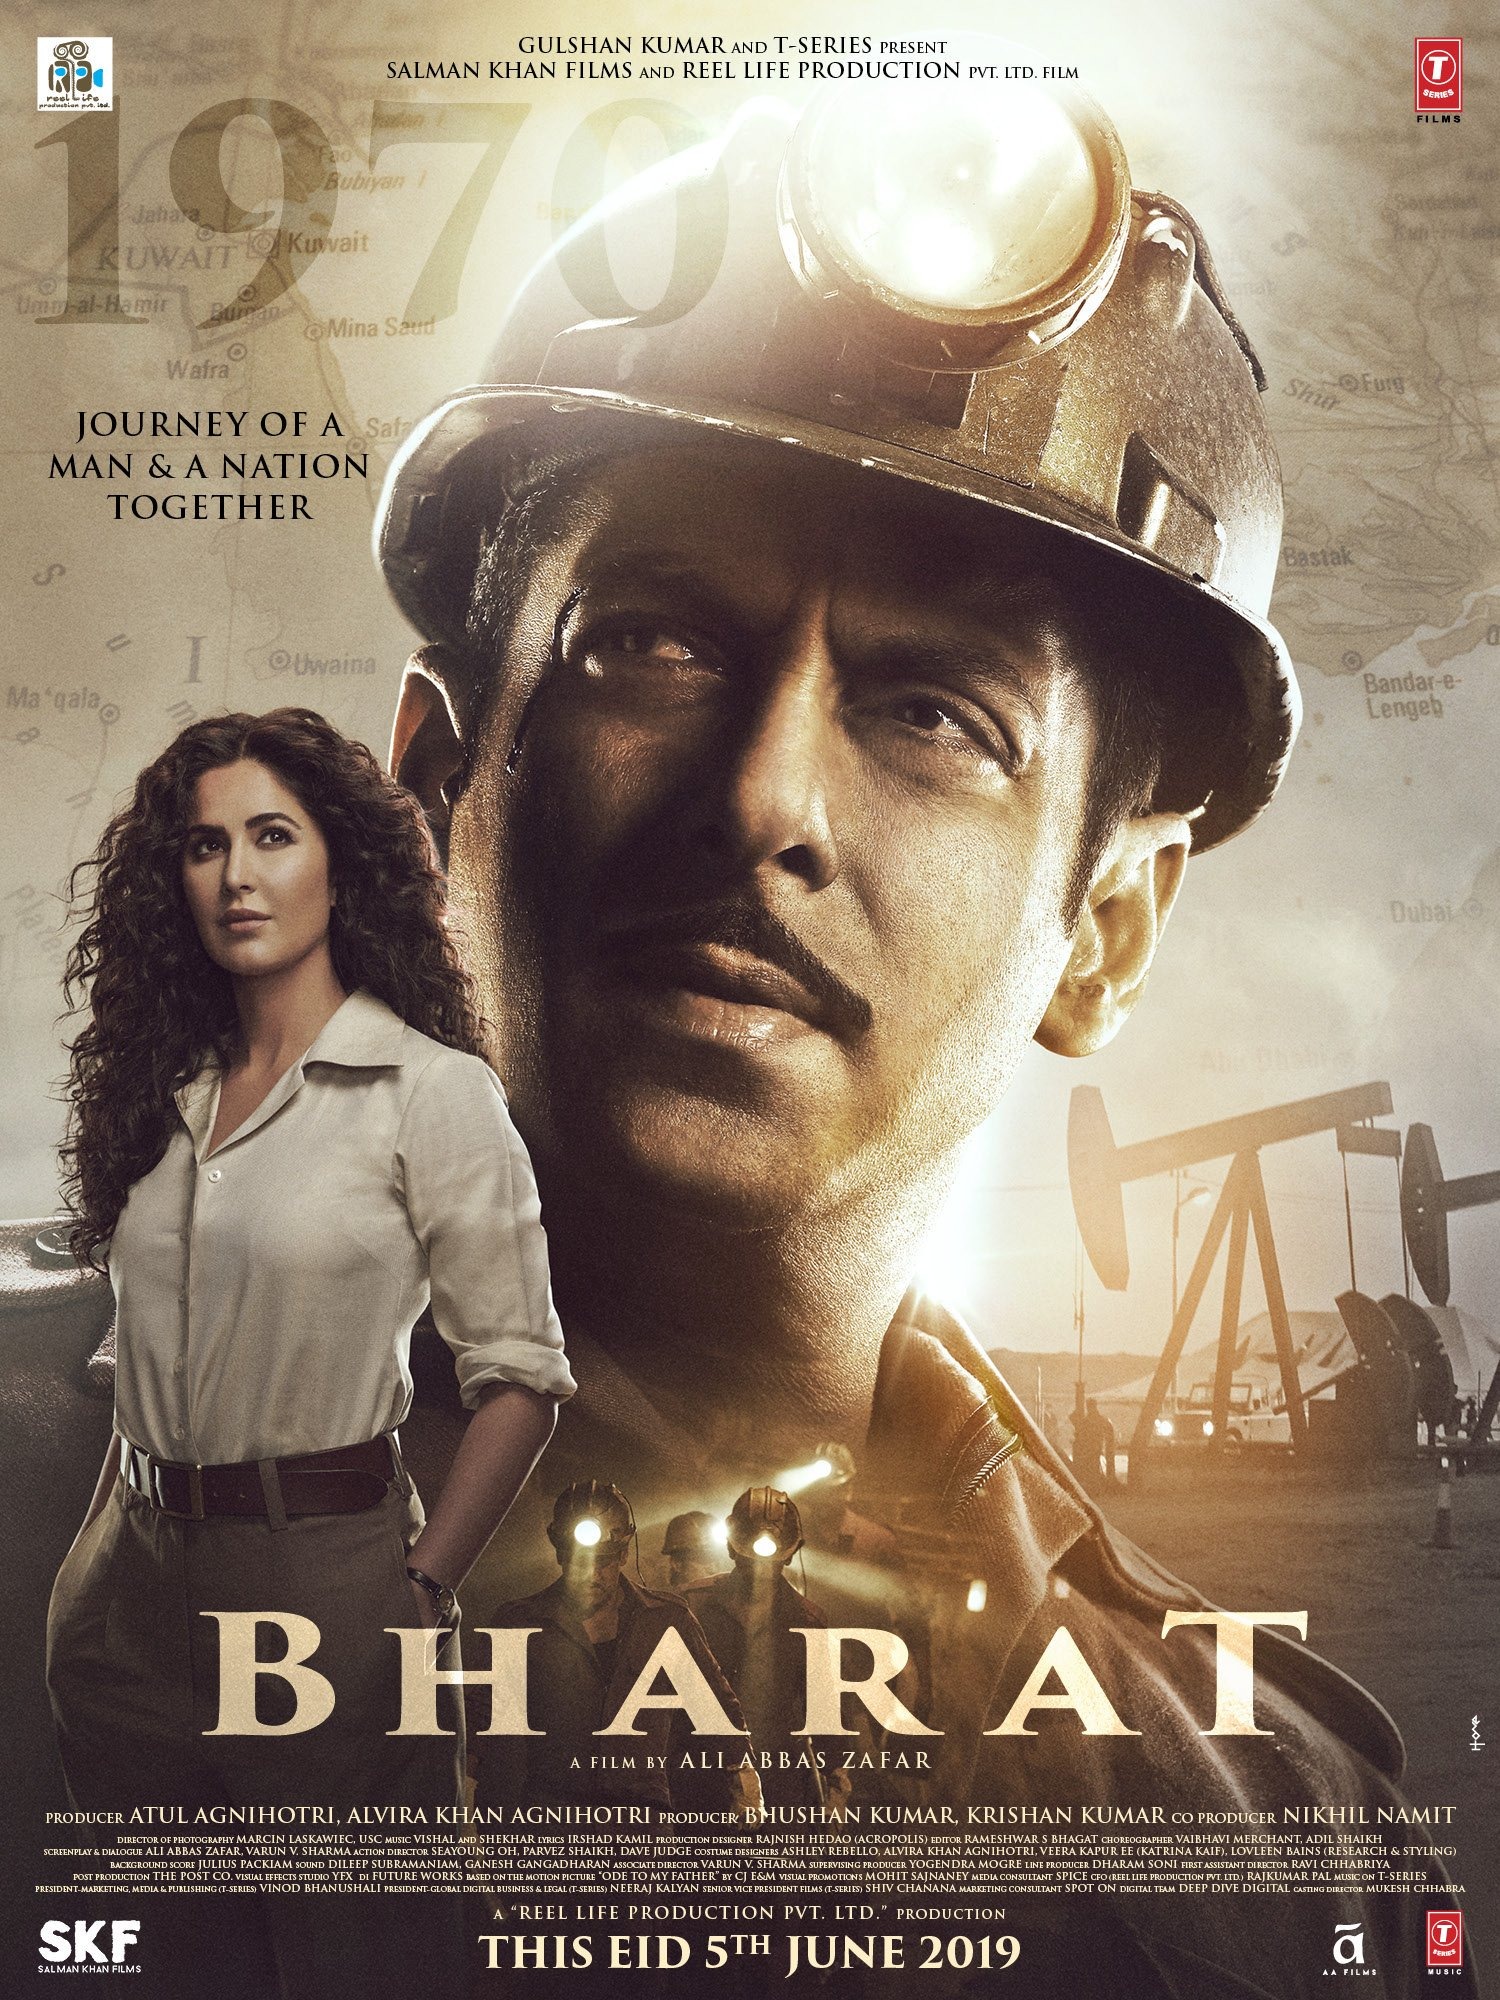 Mega Sized Movie Poster Image for Bharat 